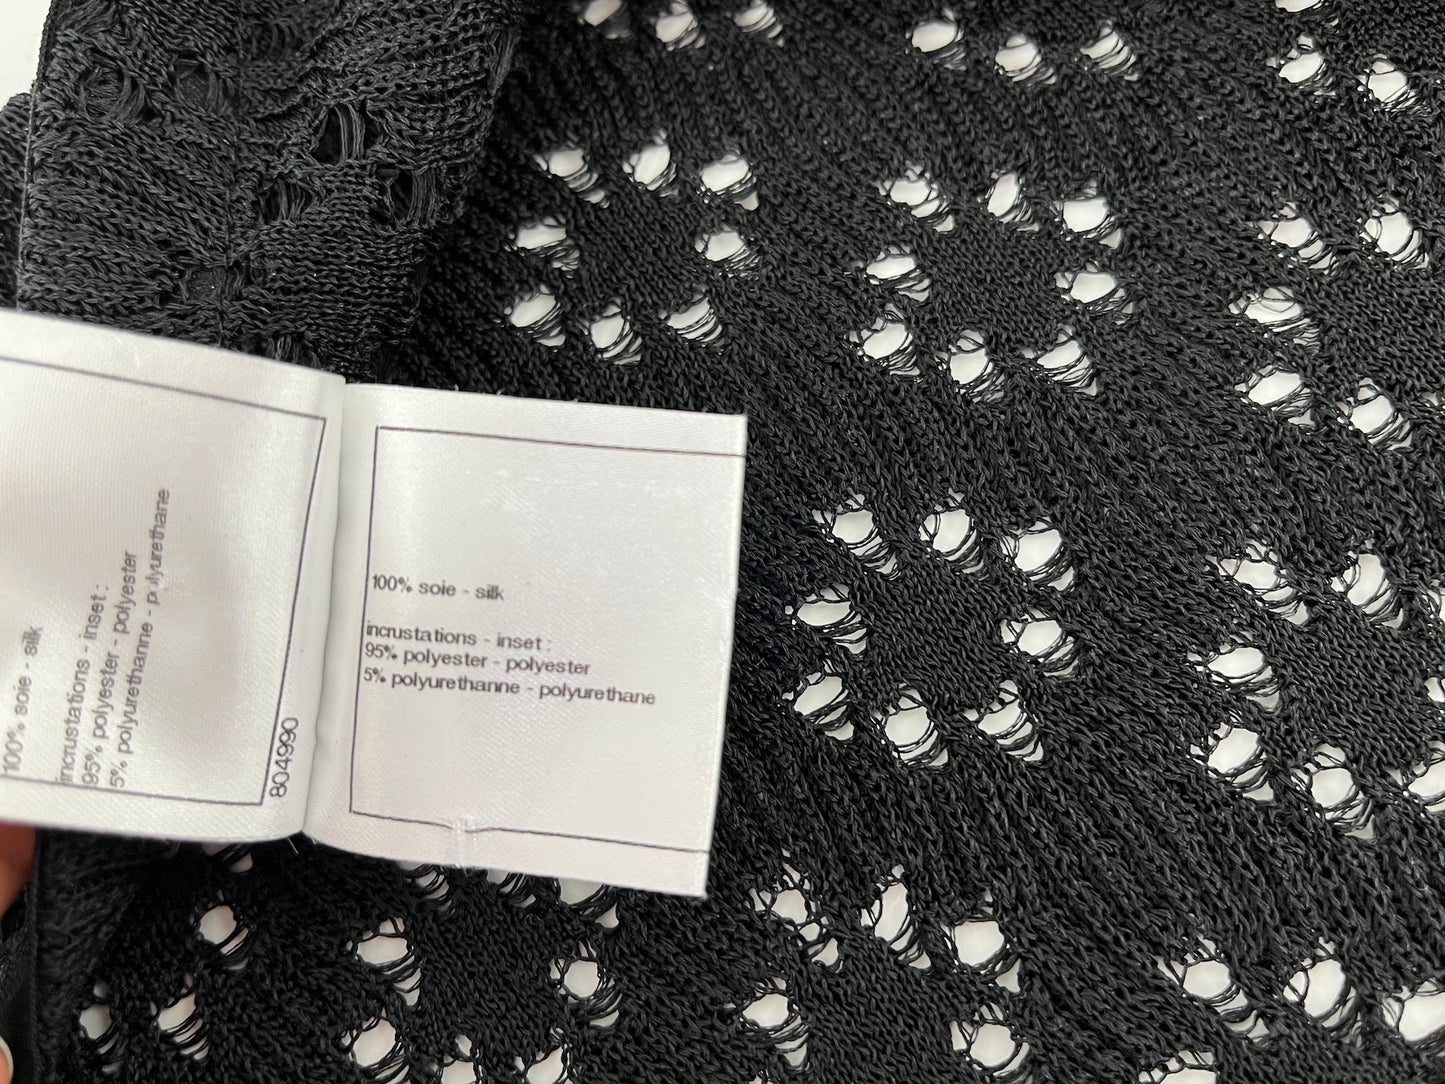 CHANEL Perforated Black Silk Knit Jacket Cardigan 40 M 8